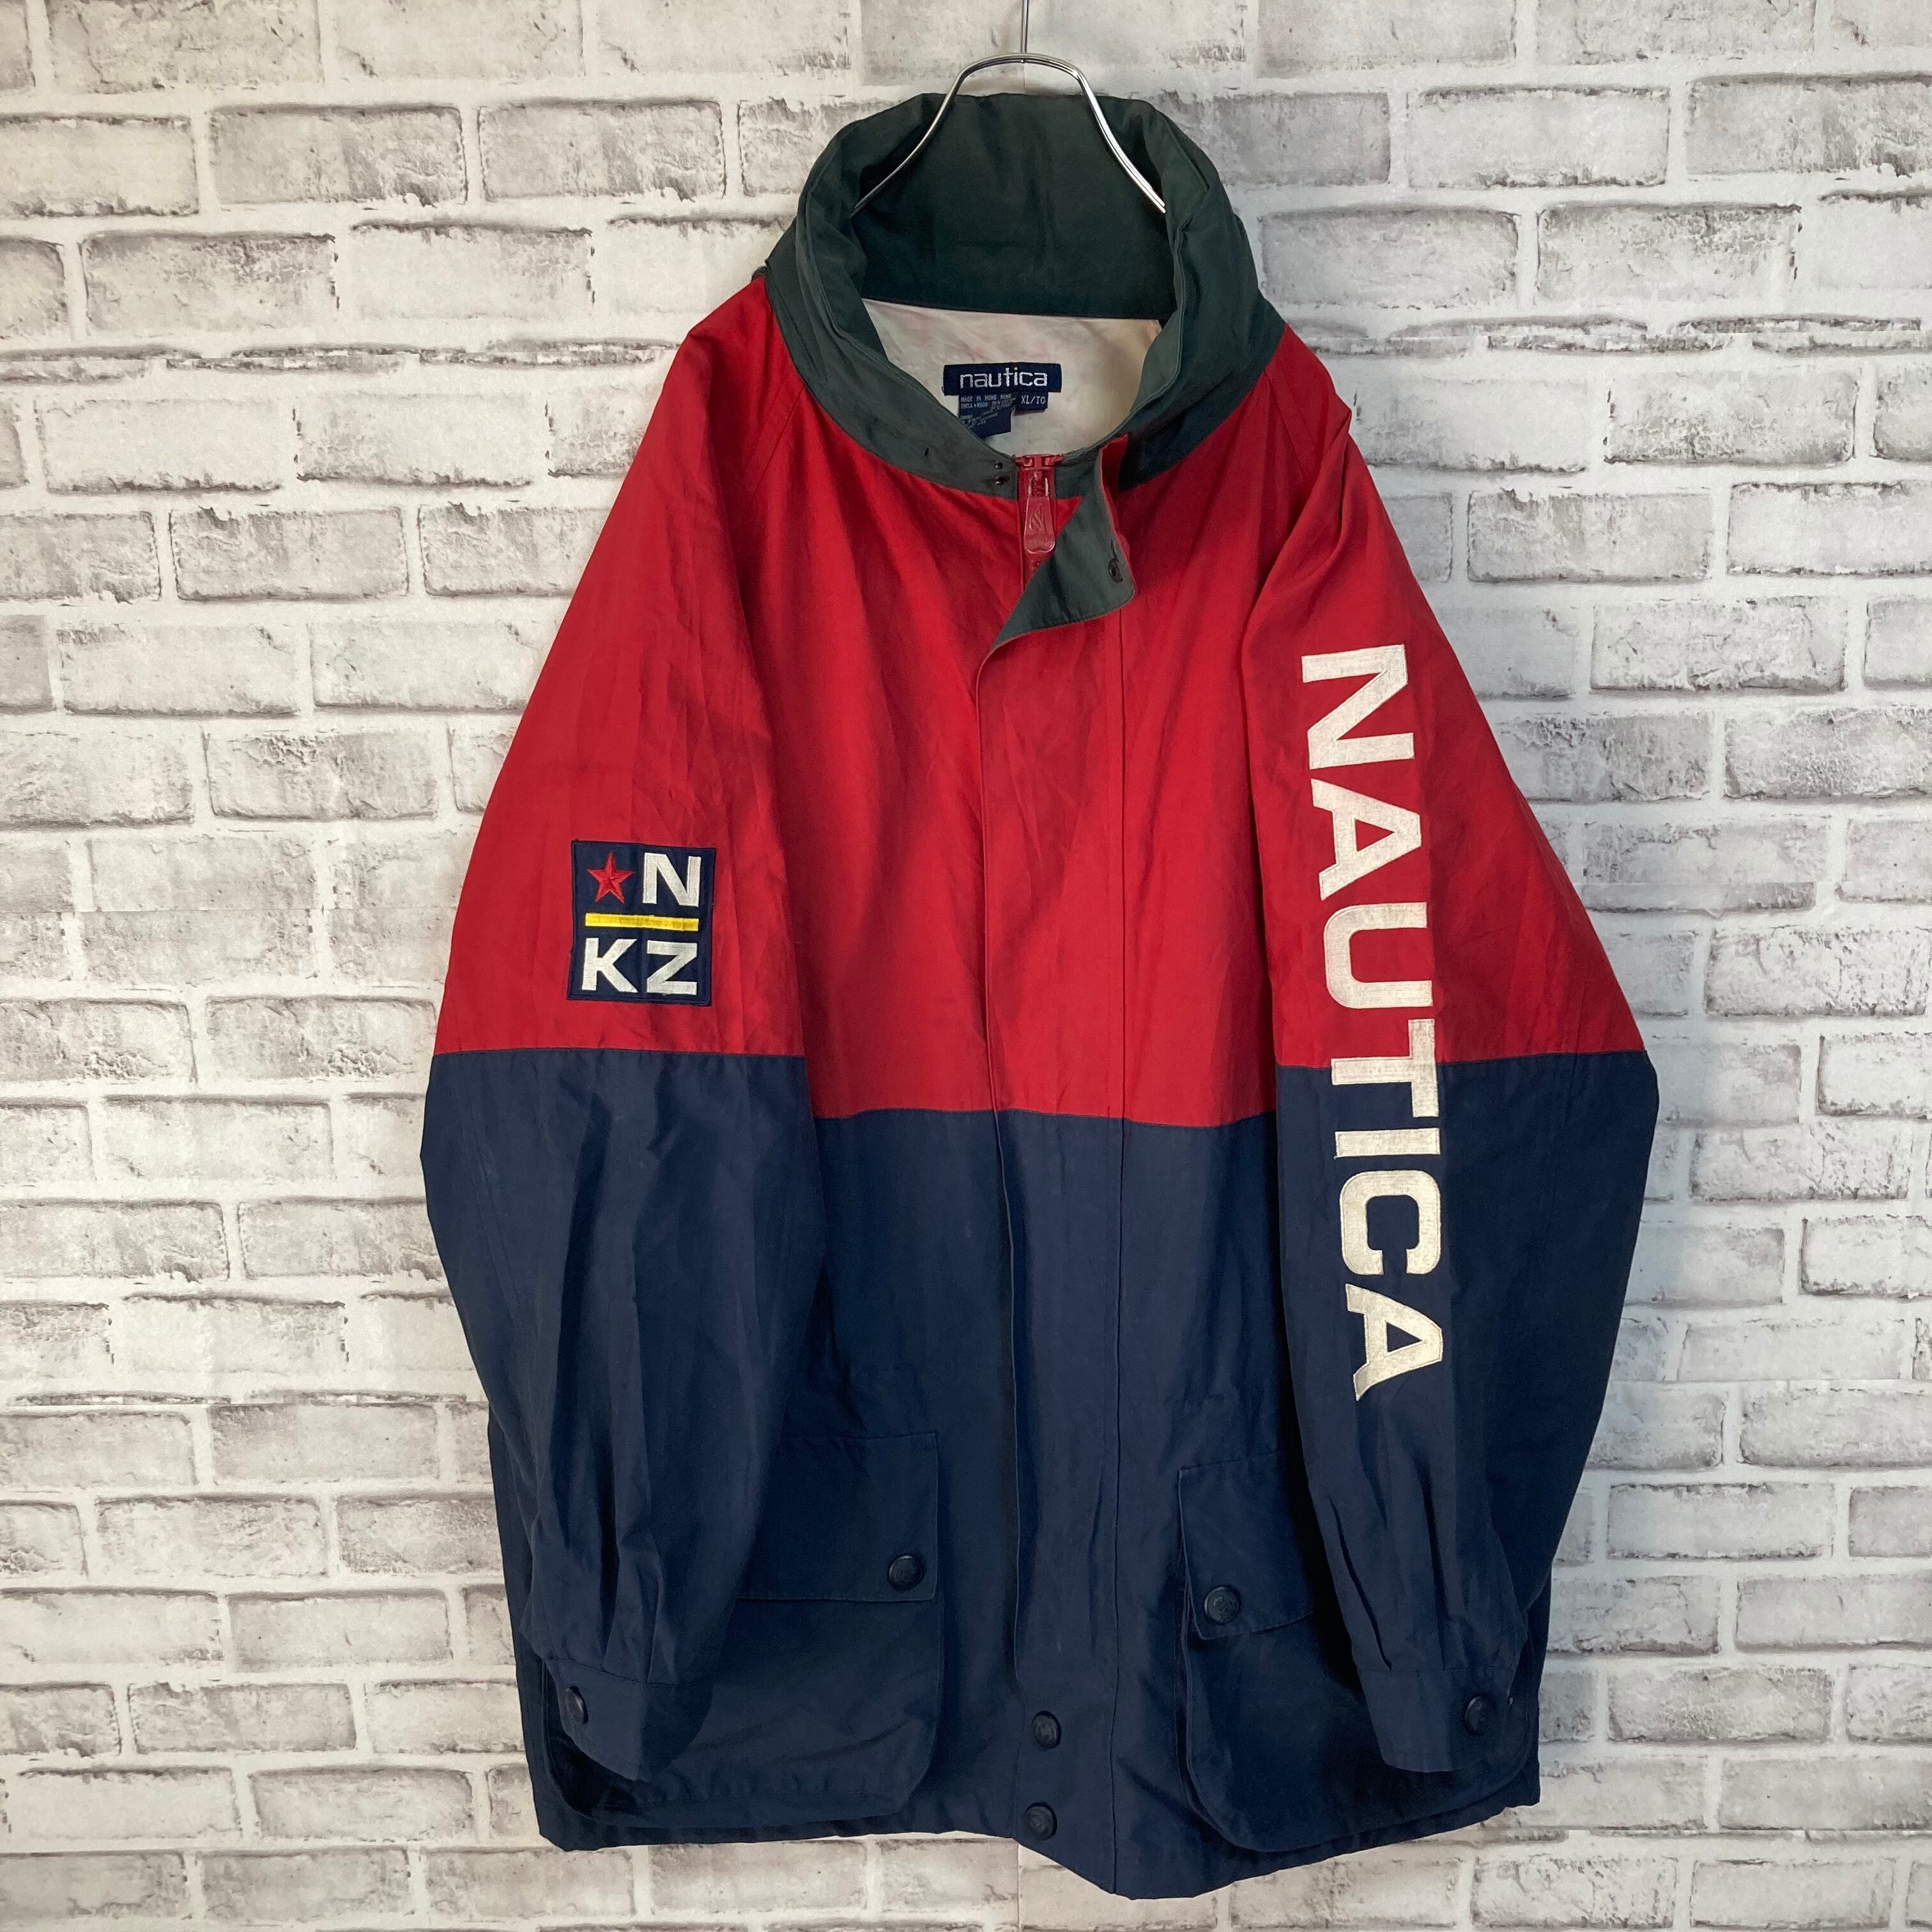 nautica】Nylon Jacket XL 90s “Old nautica”ノーティカ ナイロン ...